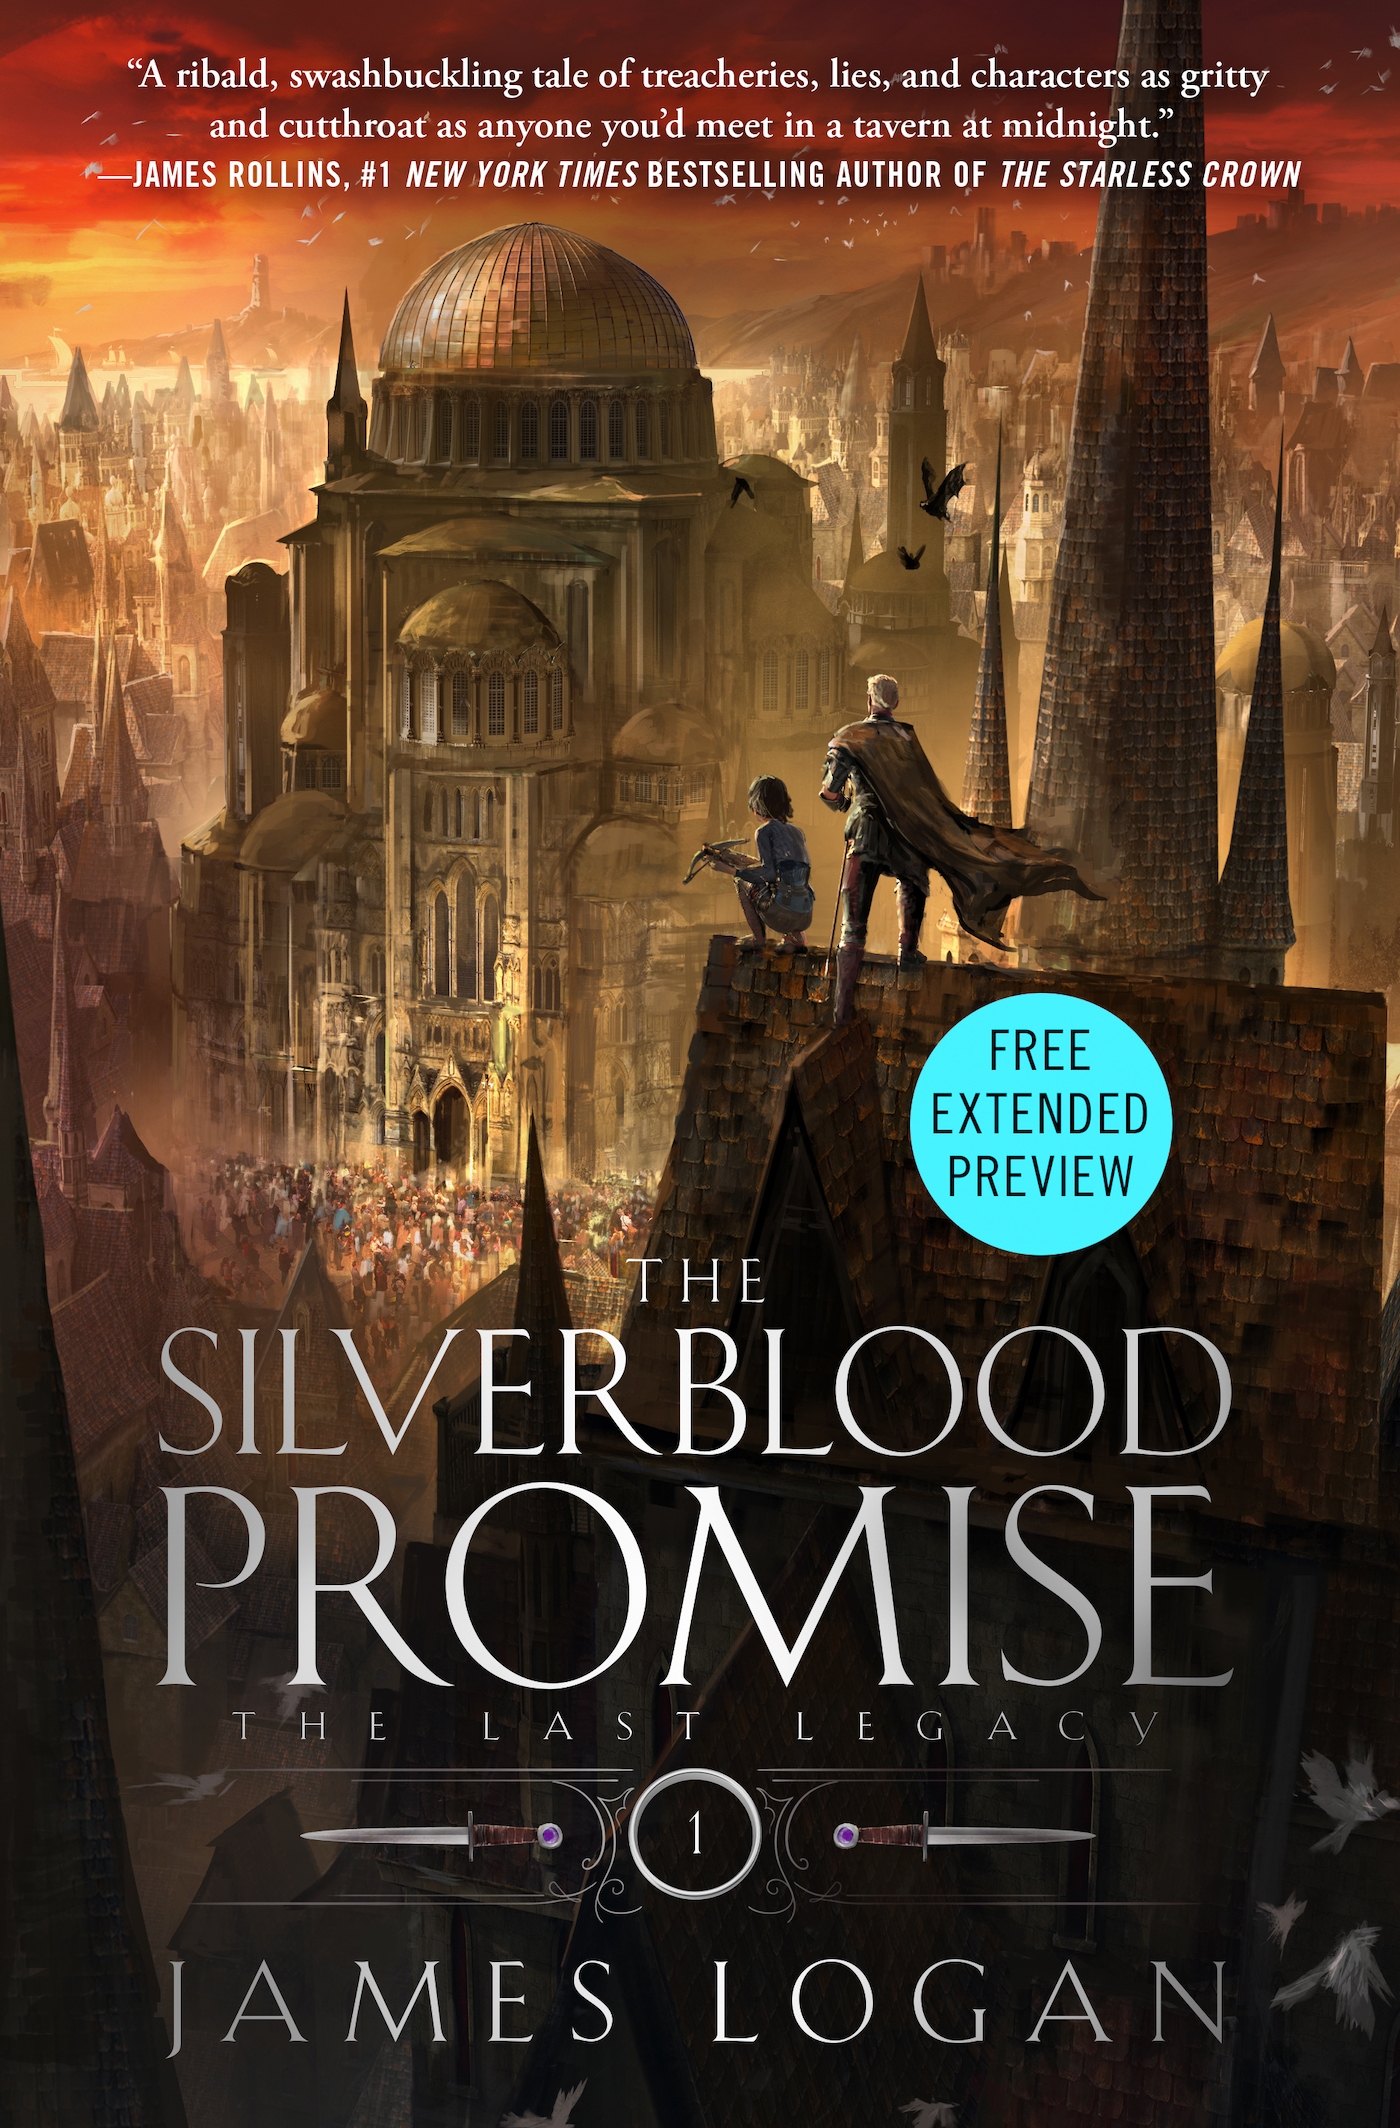 Sneak Peek for The Silverblood Promise by James Logan